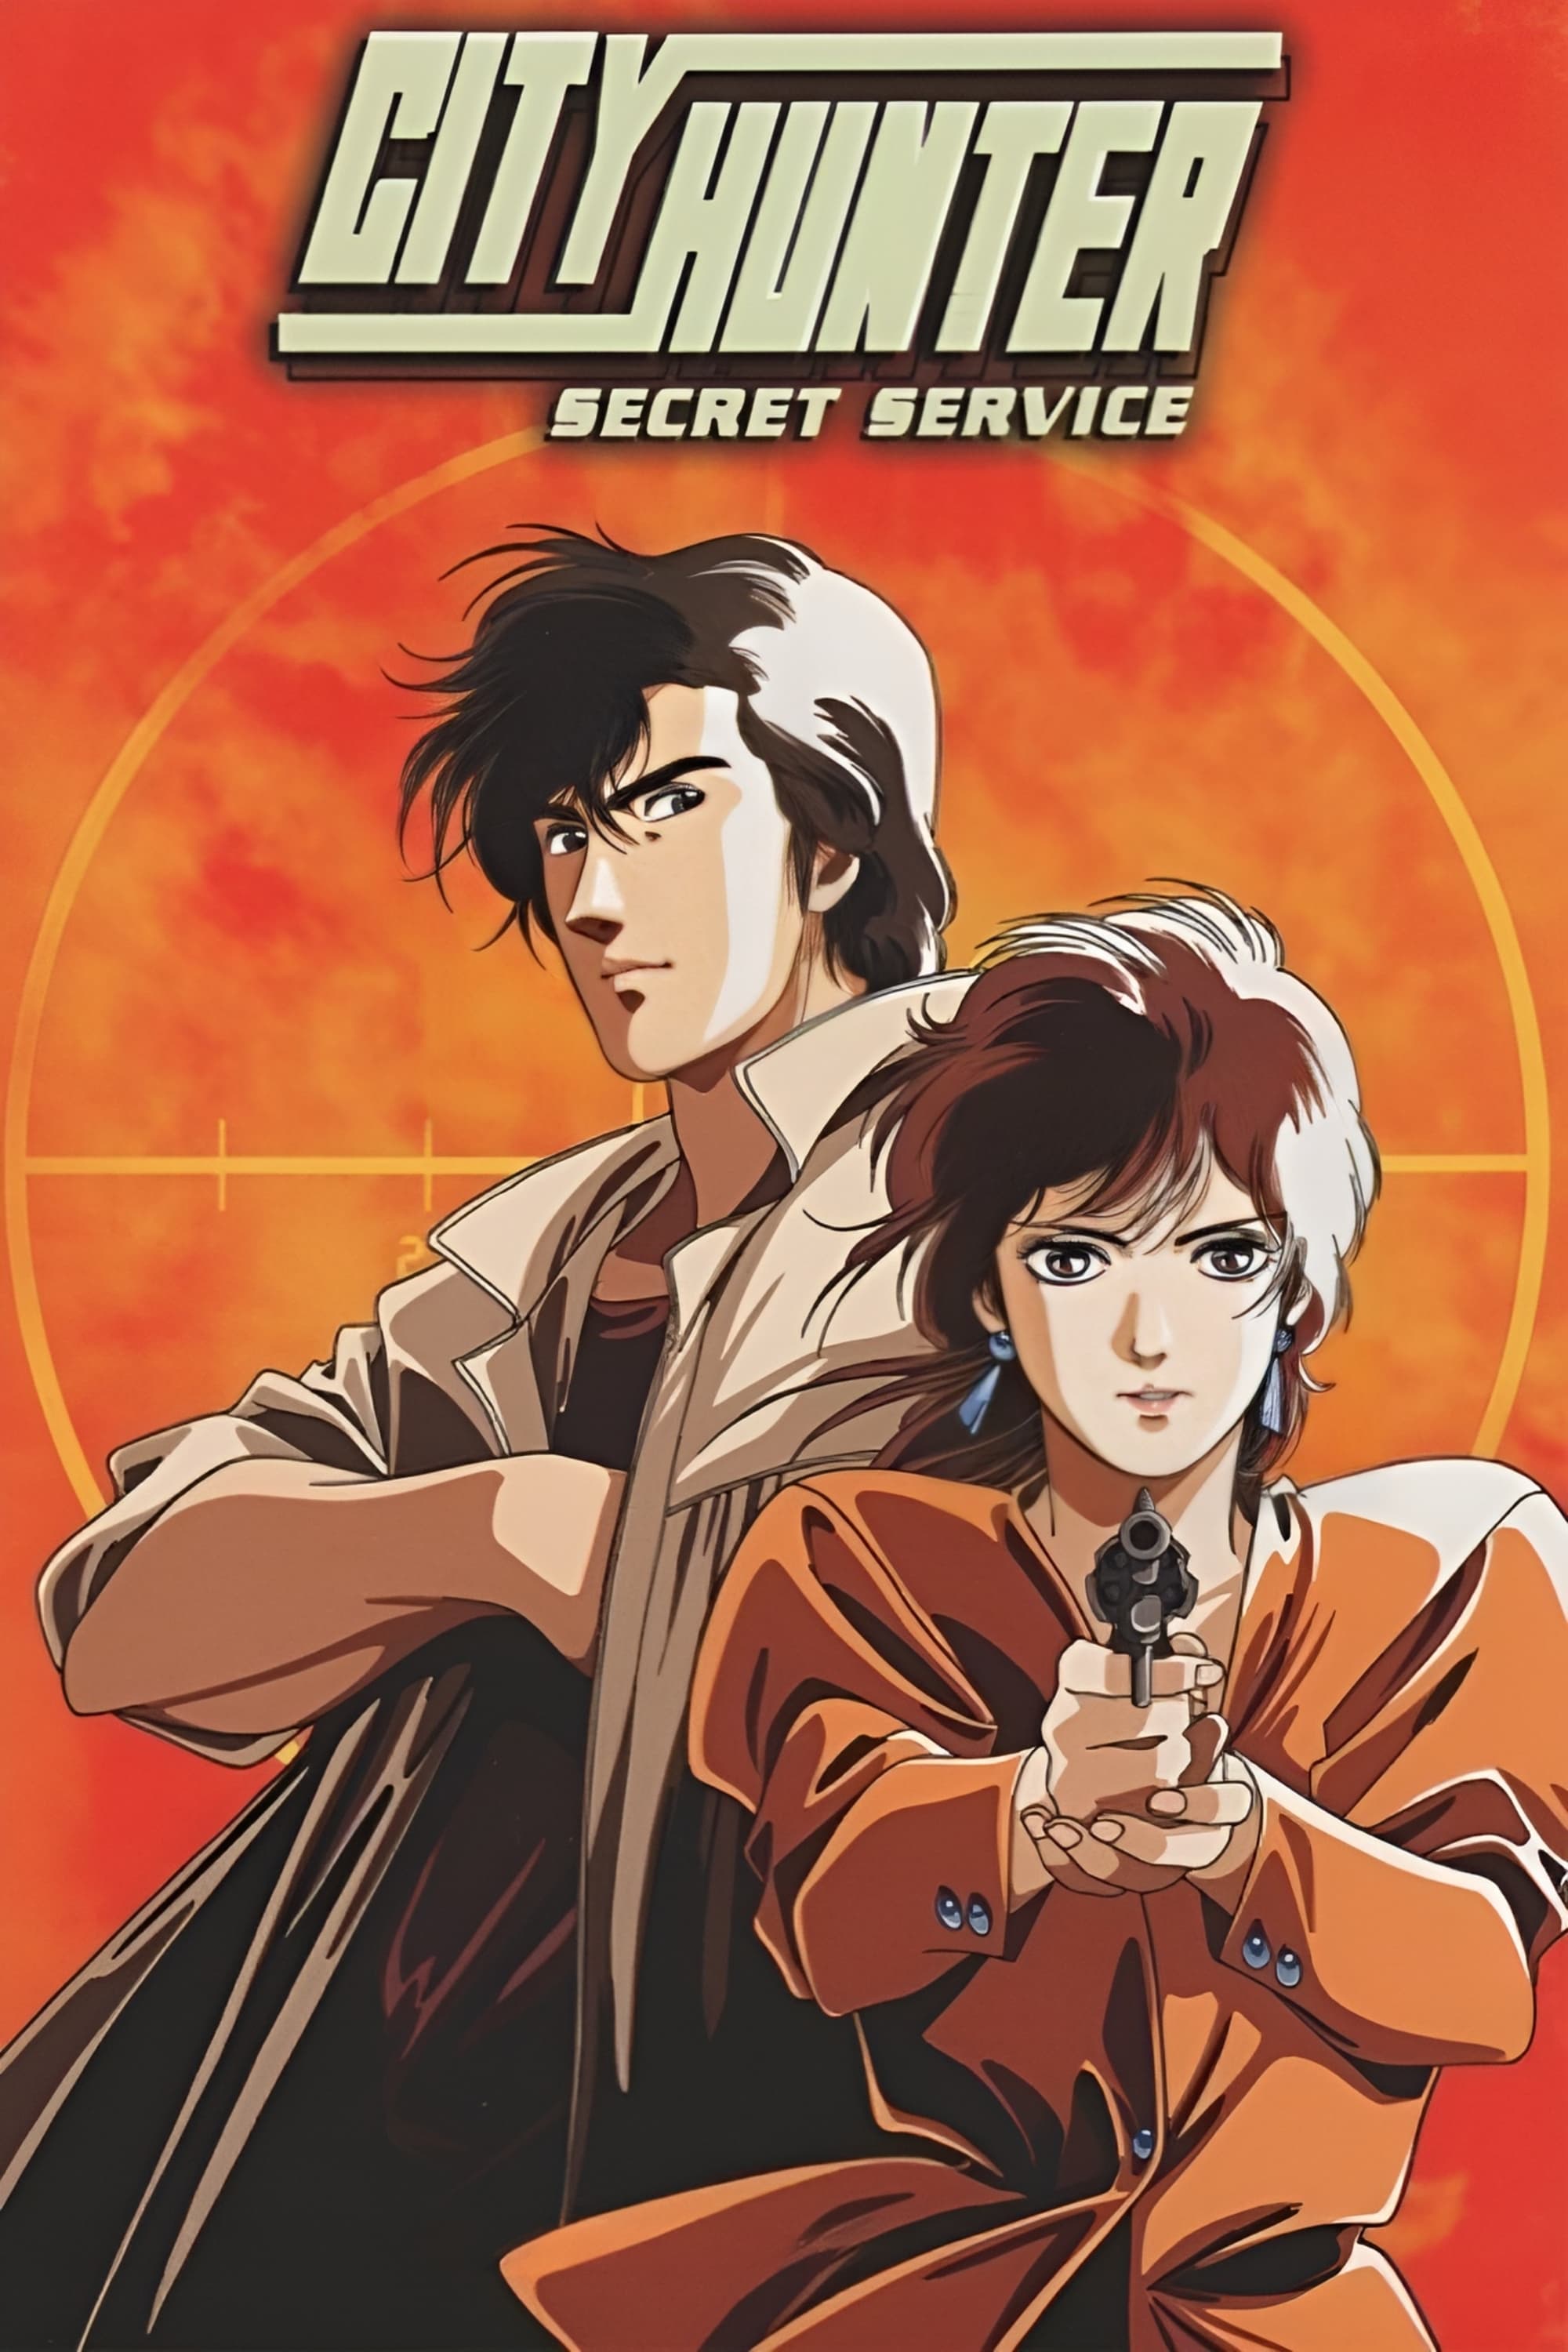 City Hunter Special: The Secret Service (1996)